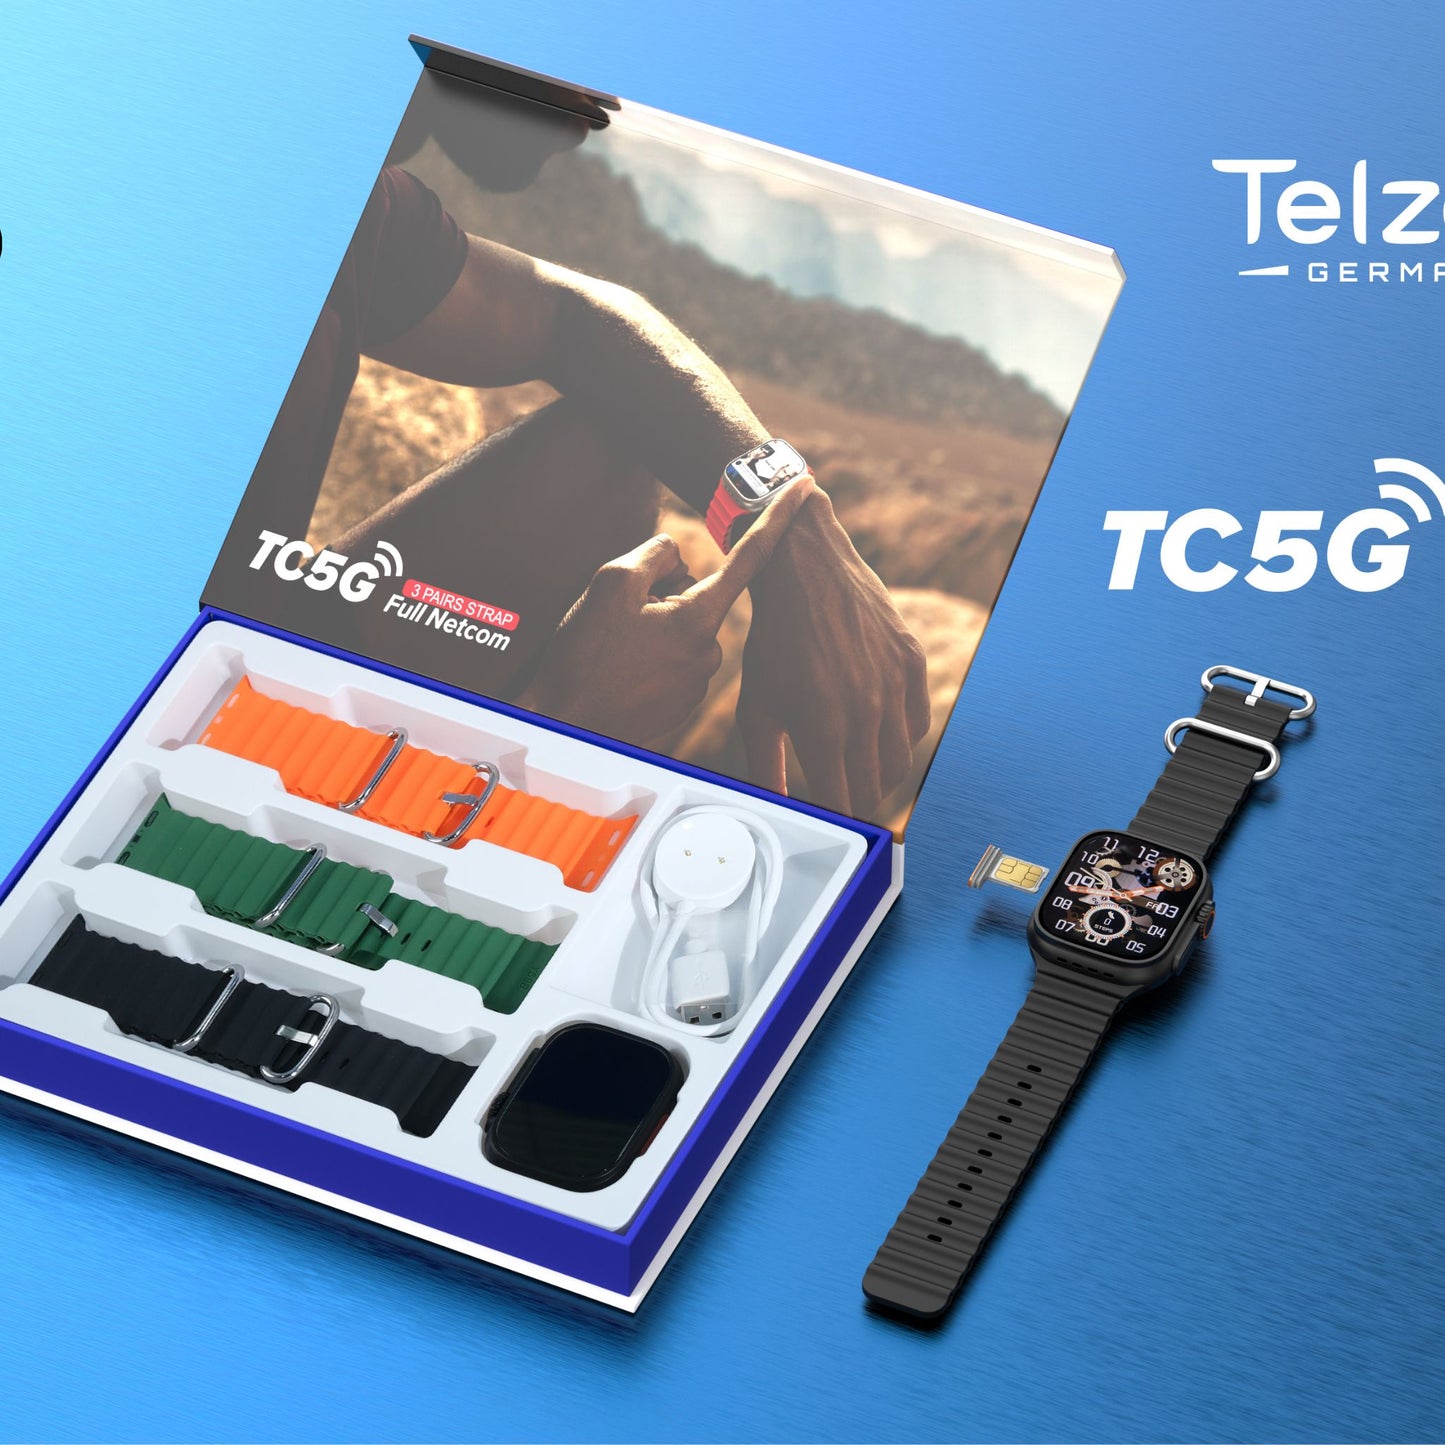 Luxury Grade Telzeal Germany TC5G 2.2 Inch Full Screen Display SmartWatch_Black